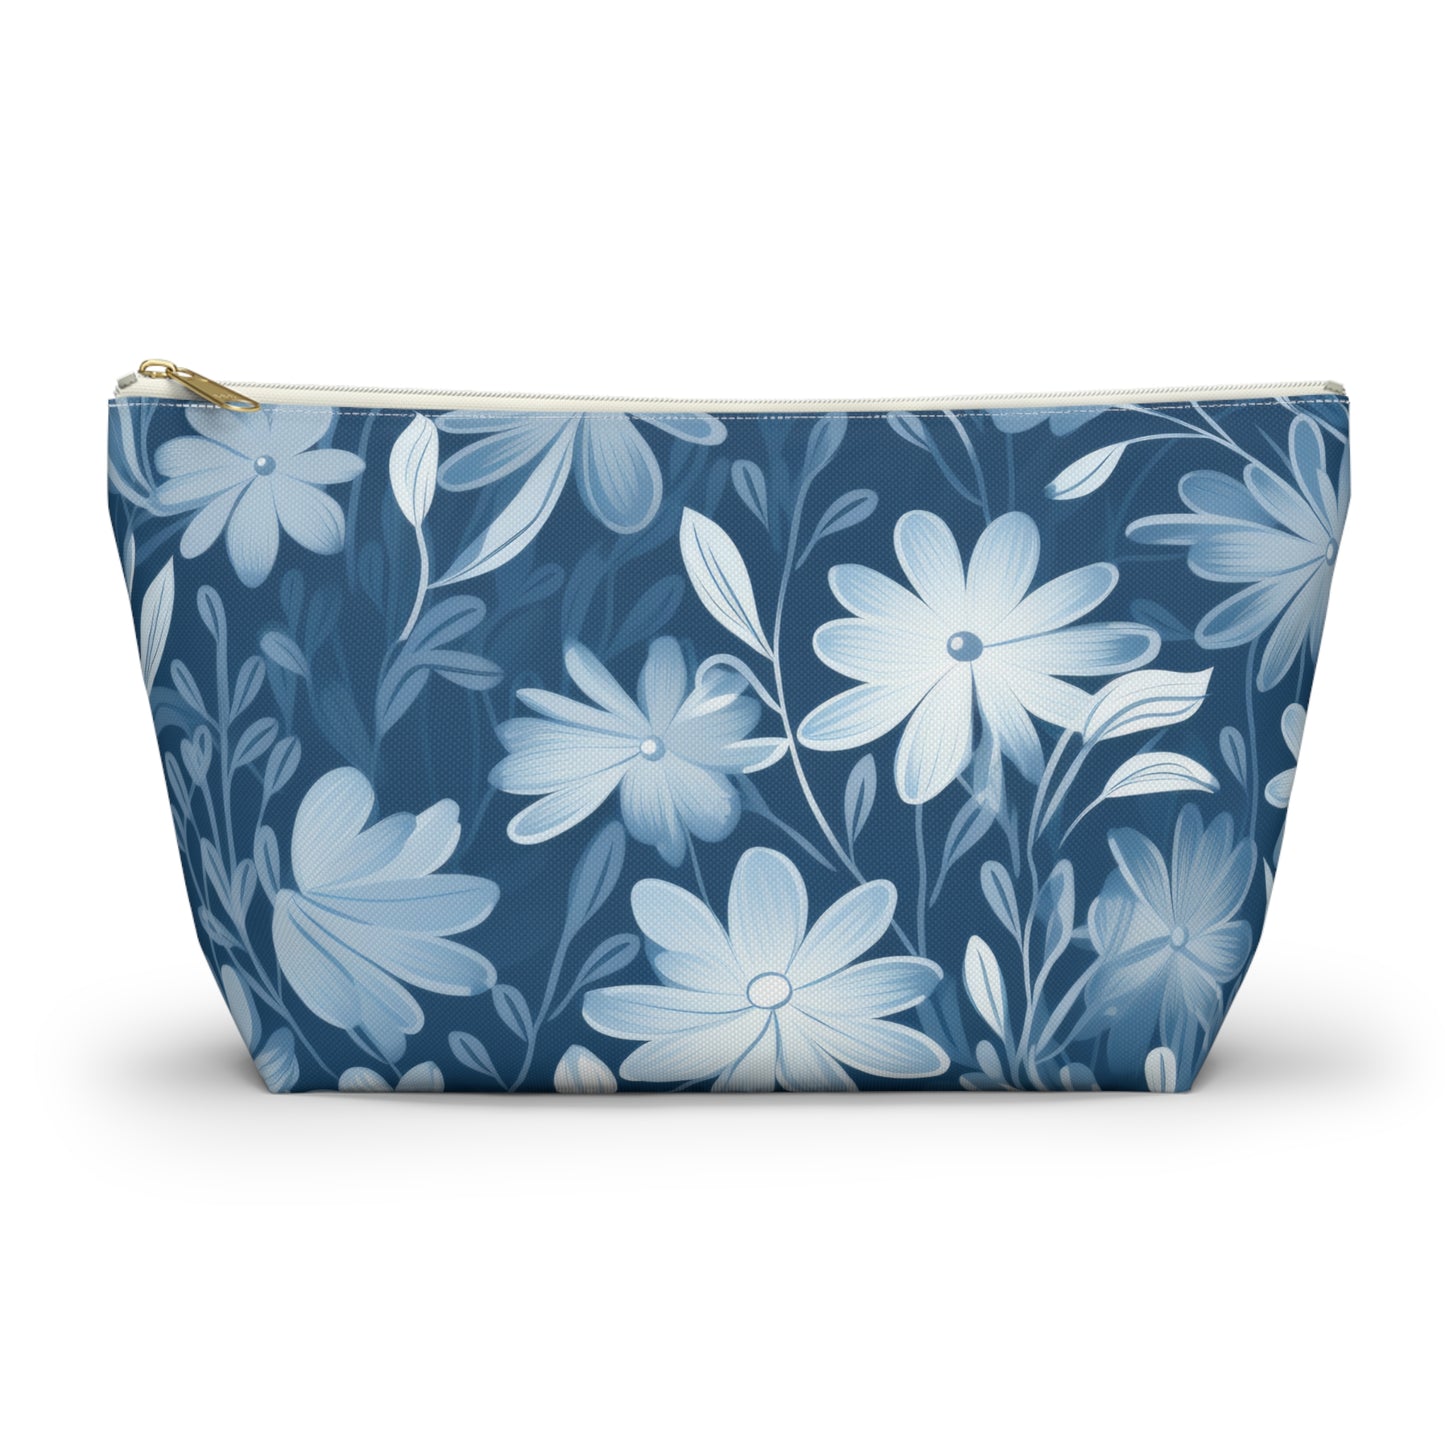 Gentle Elegance: Soft Muted Blue Flower Design  - Makeup & Accessory Bag 2 Sizes